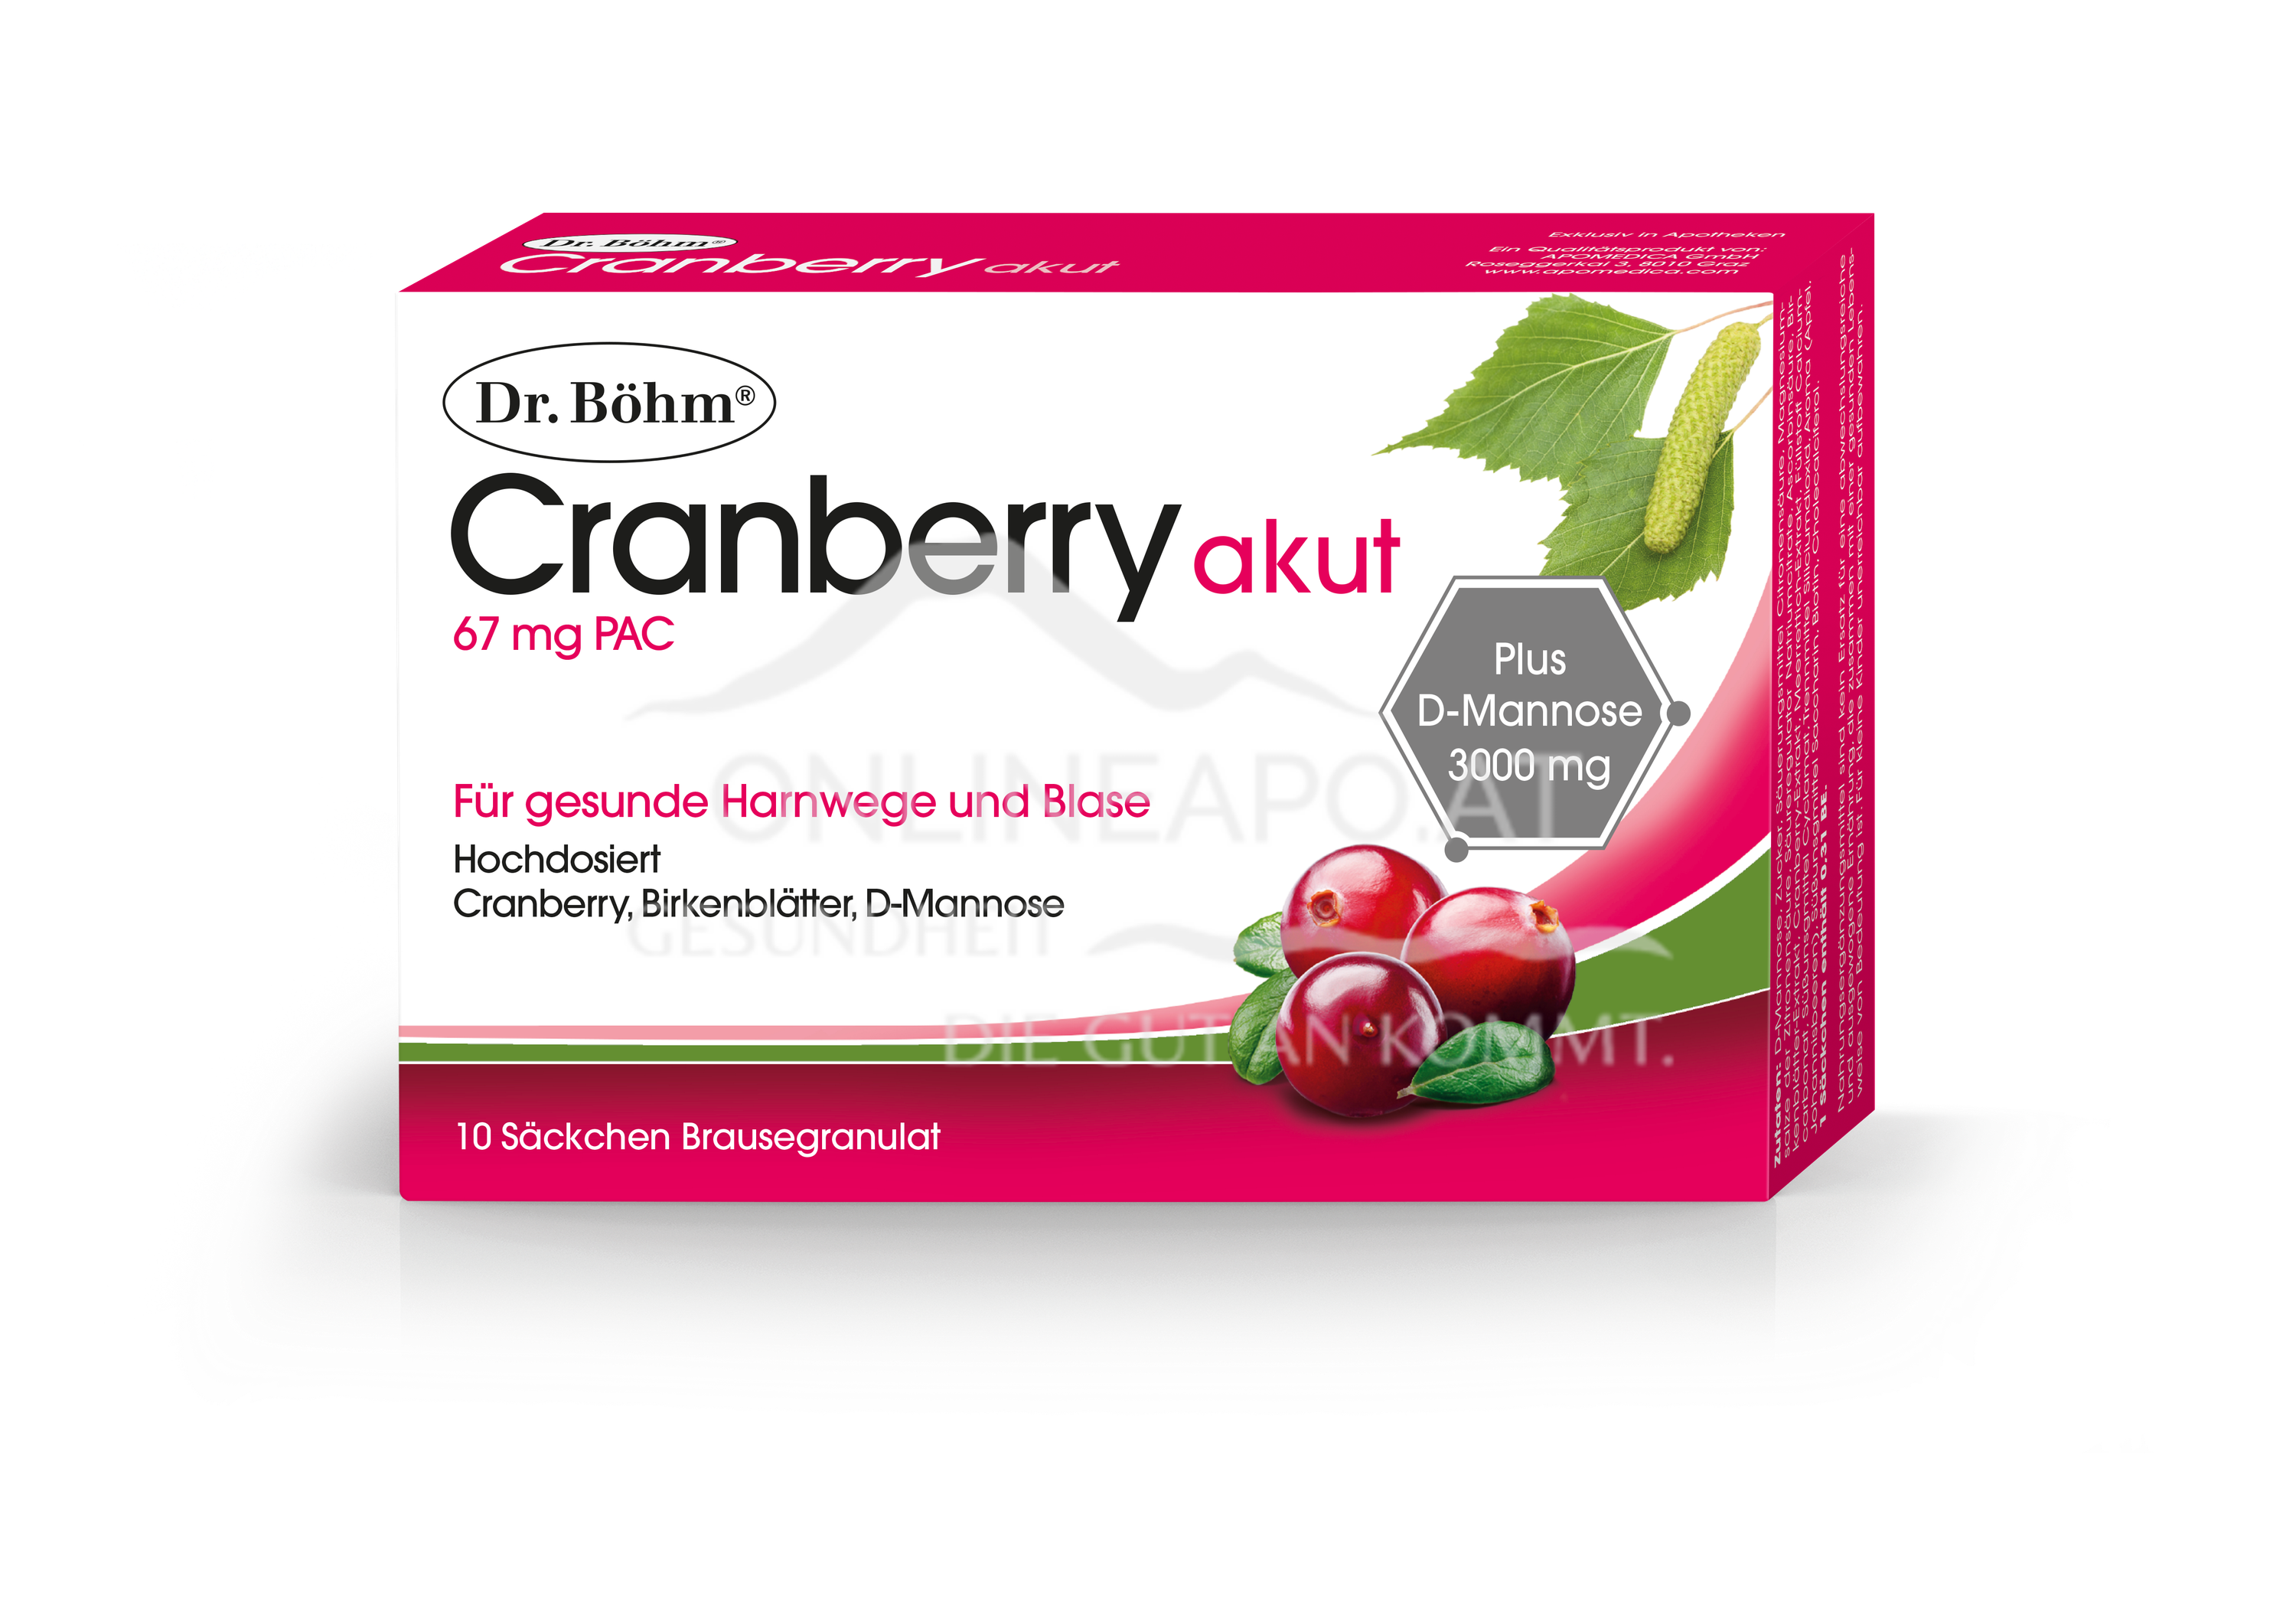 Dr. Böhm® Cranberry akut Brausegranulat